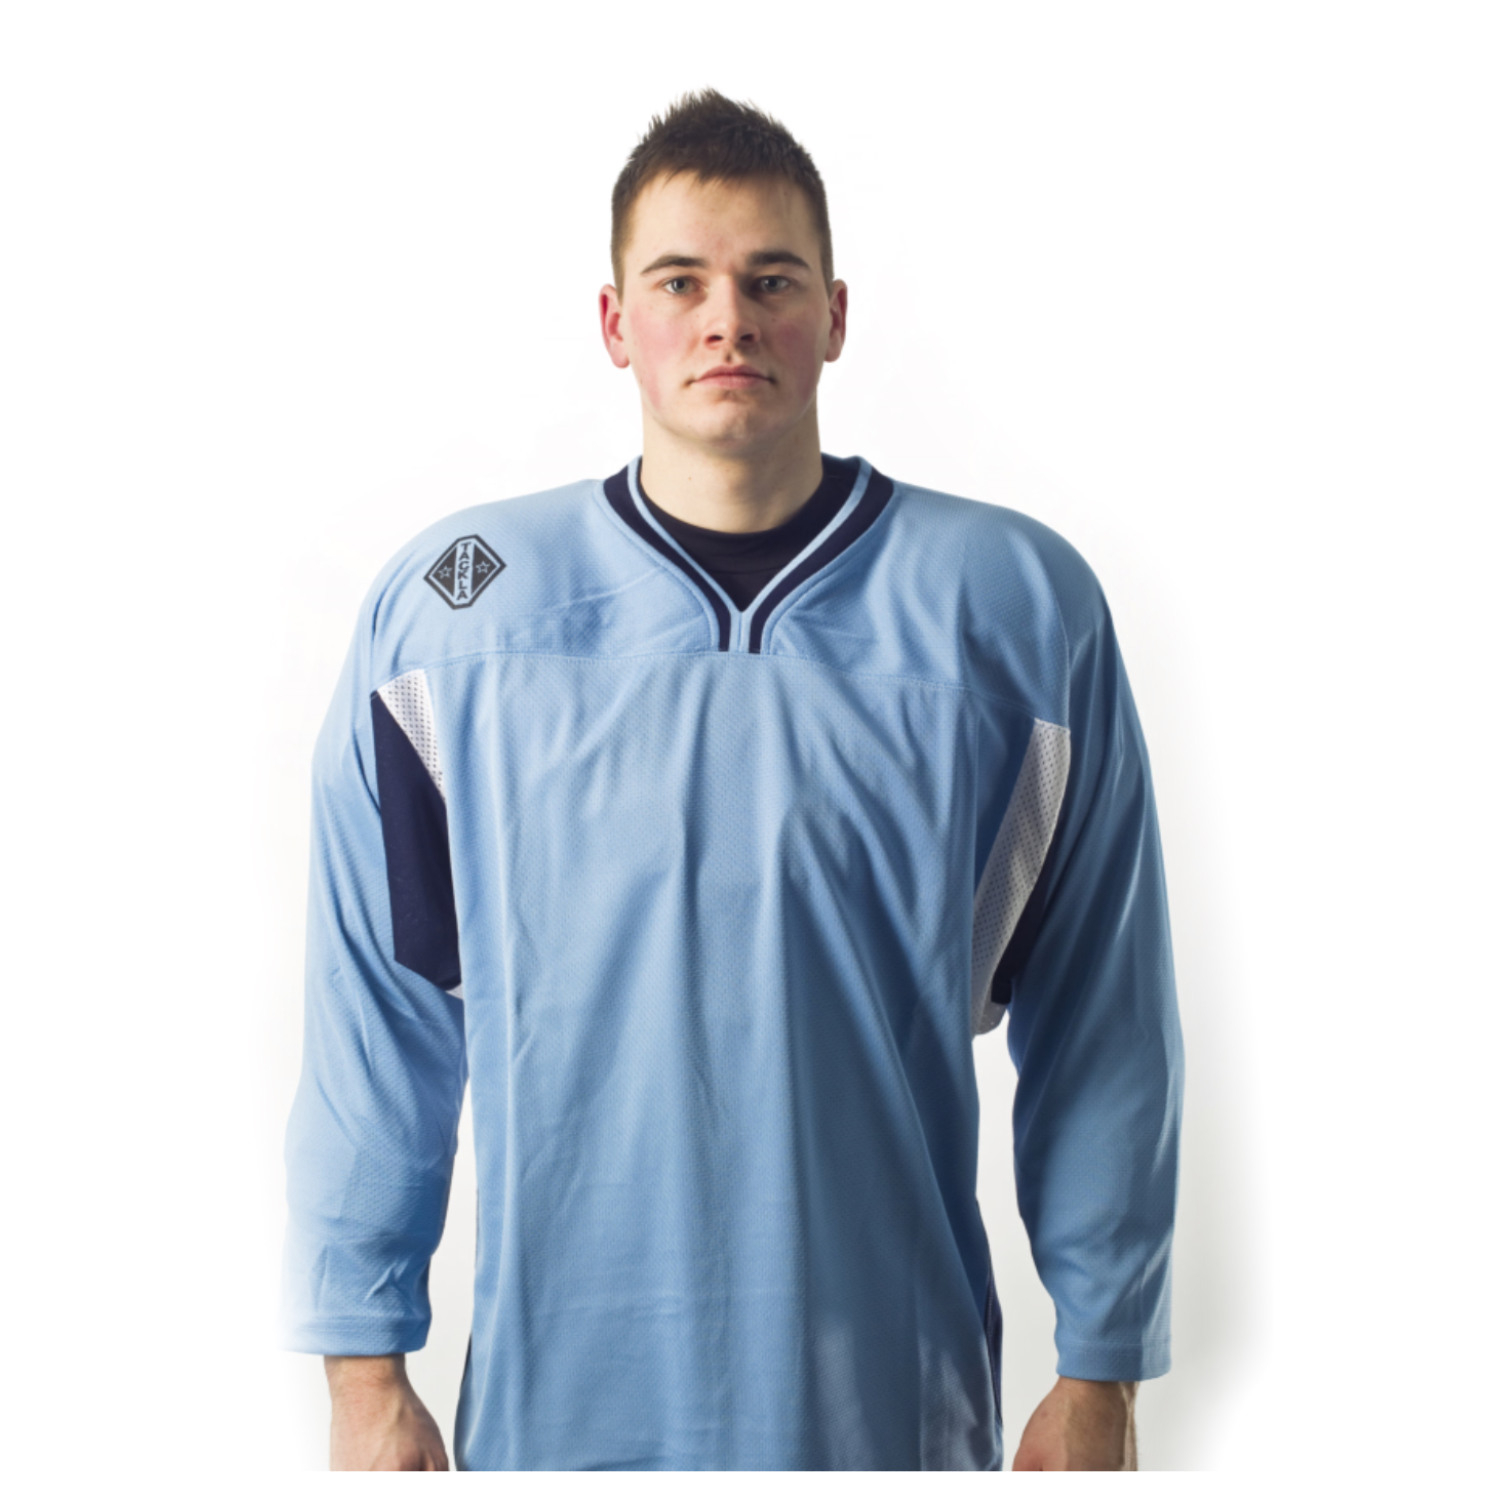 New BLUES JERSEY AWAY SR-3XL Ice Hockey / Jerseys & Tops